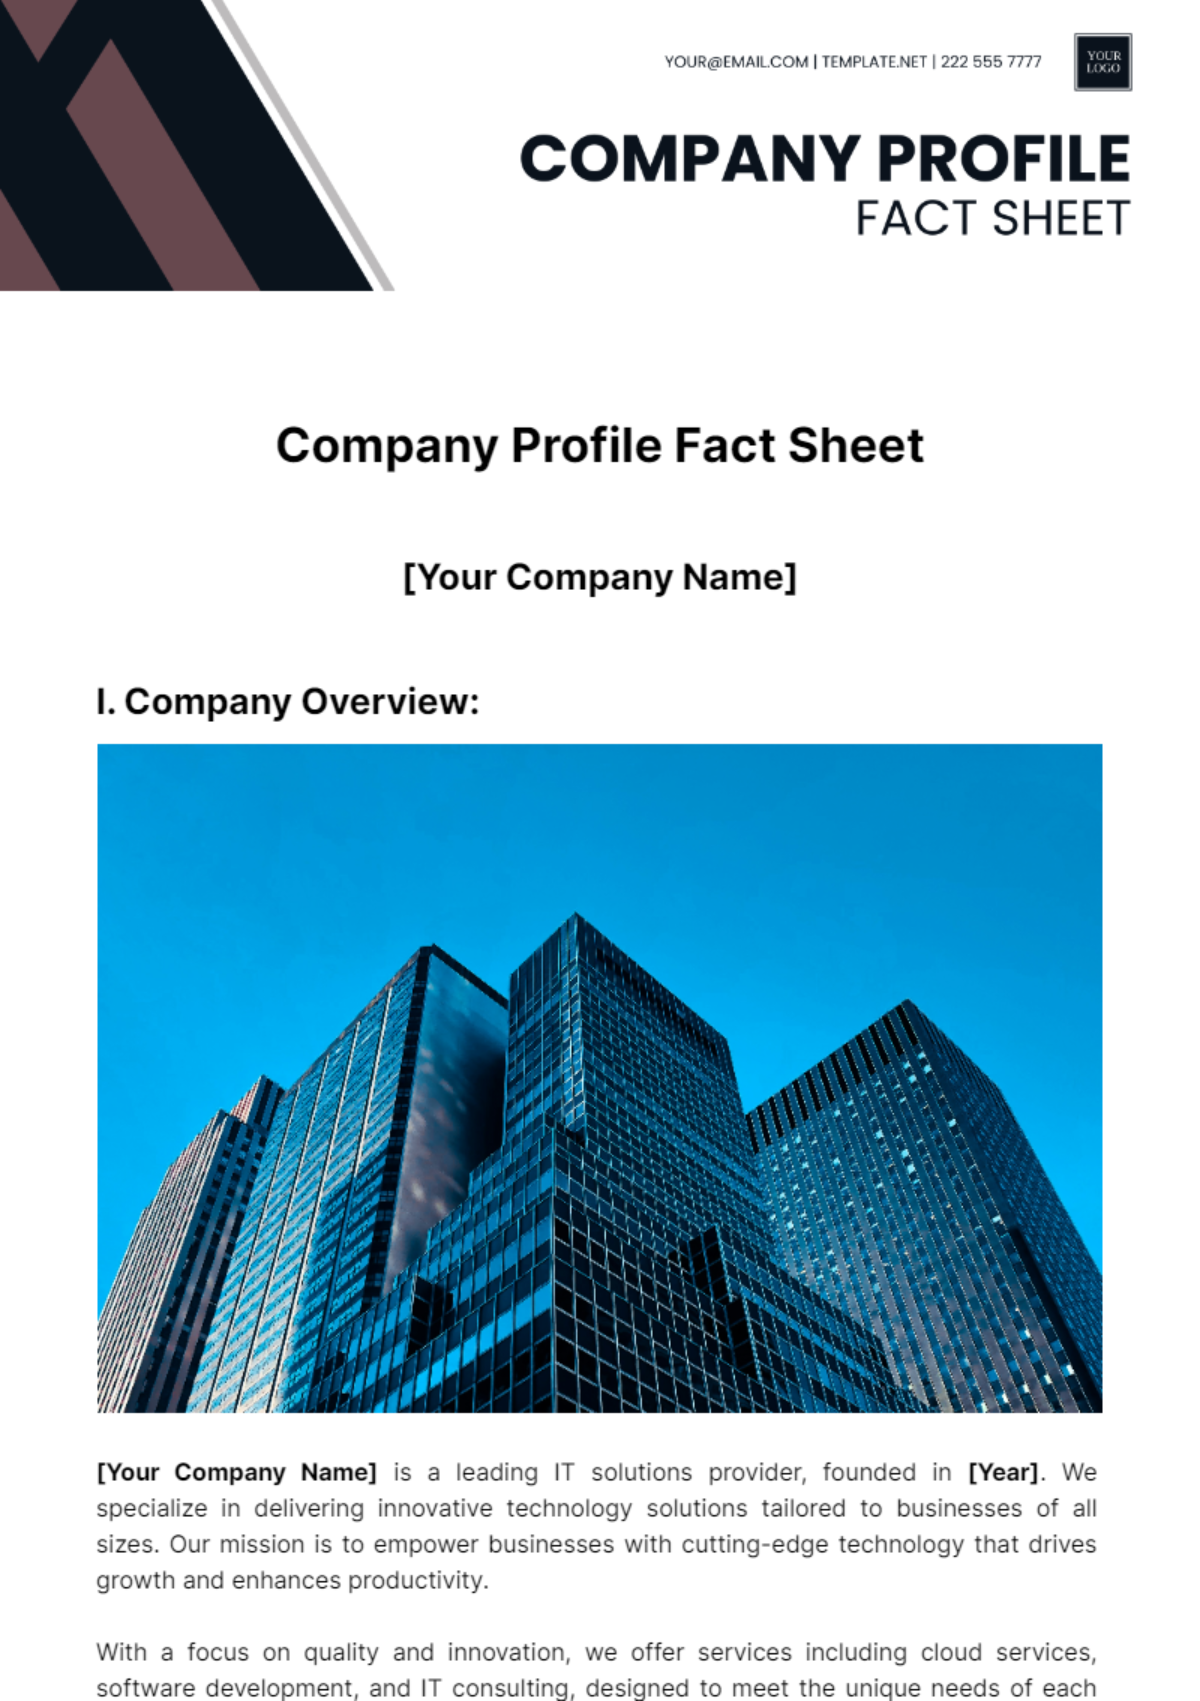 Company Profile Fact Sheet Template